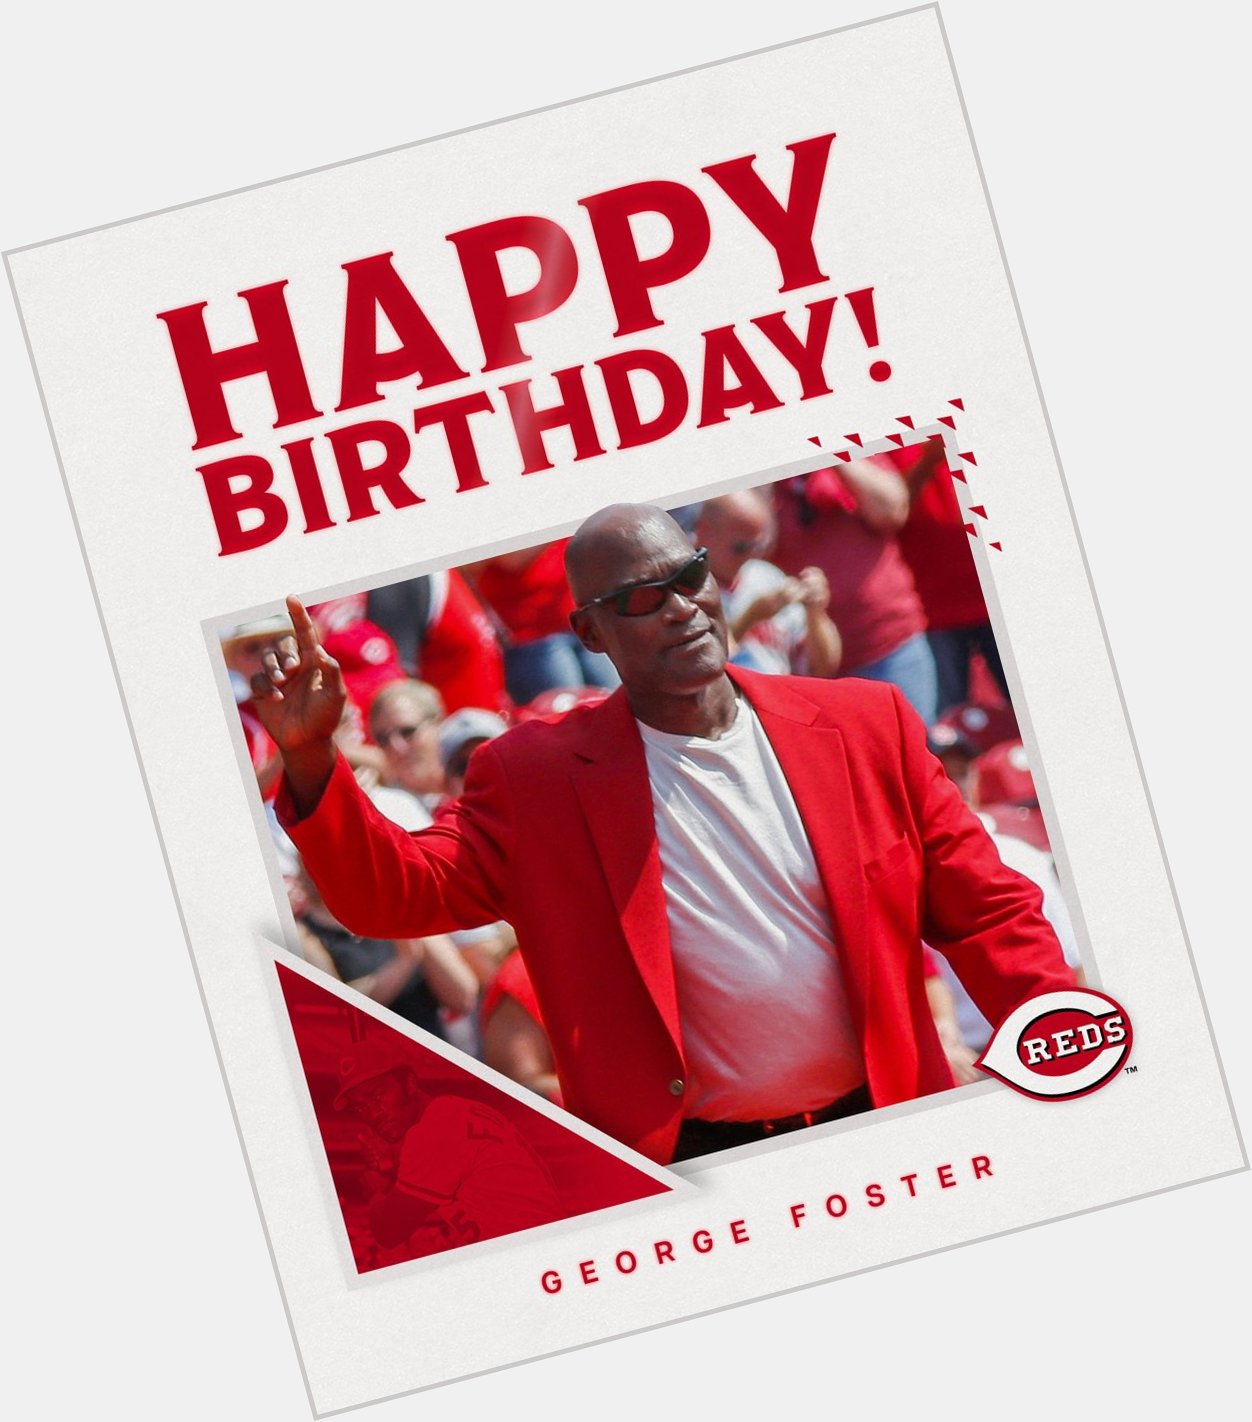 Happy 73rd birthday, George Foster!  